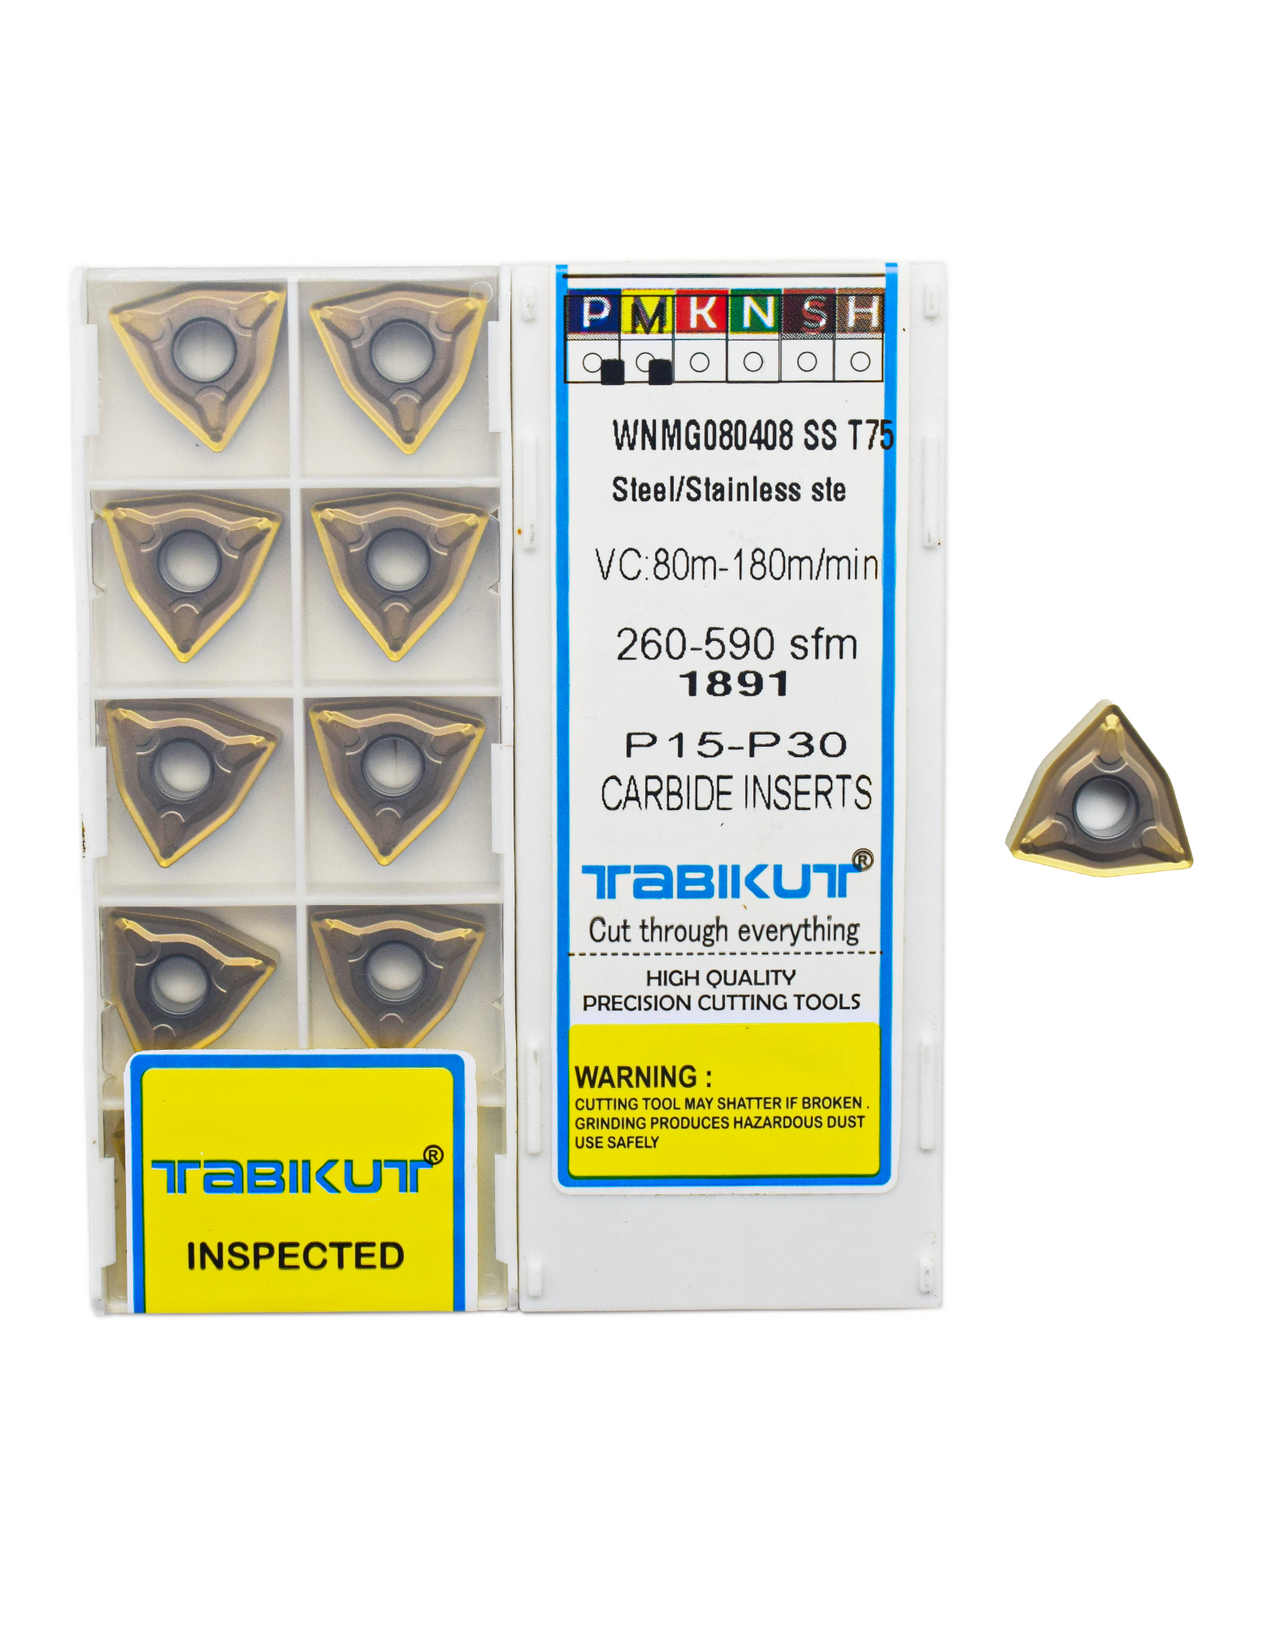 WNMG080408 specially stainless steel TABIKUTcarbide insert (1box) pack of 10